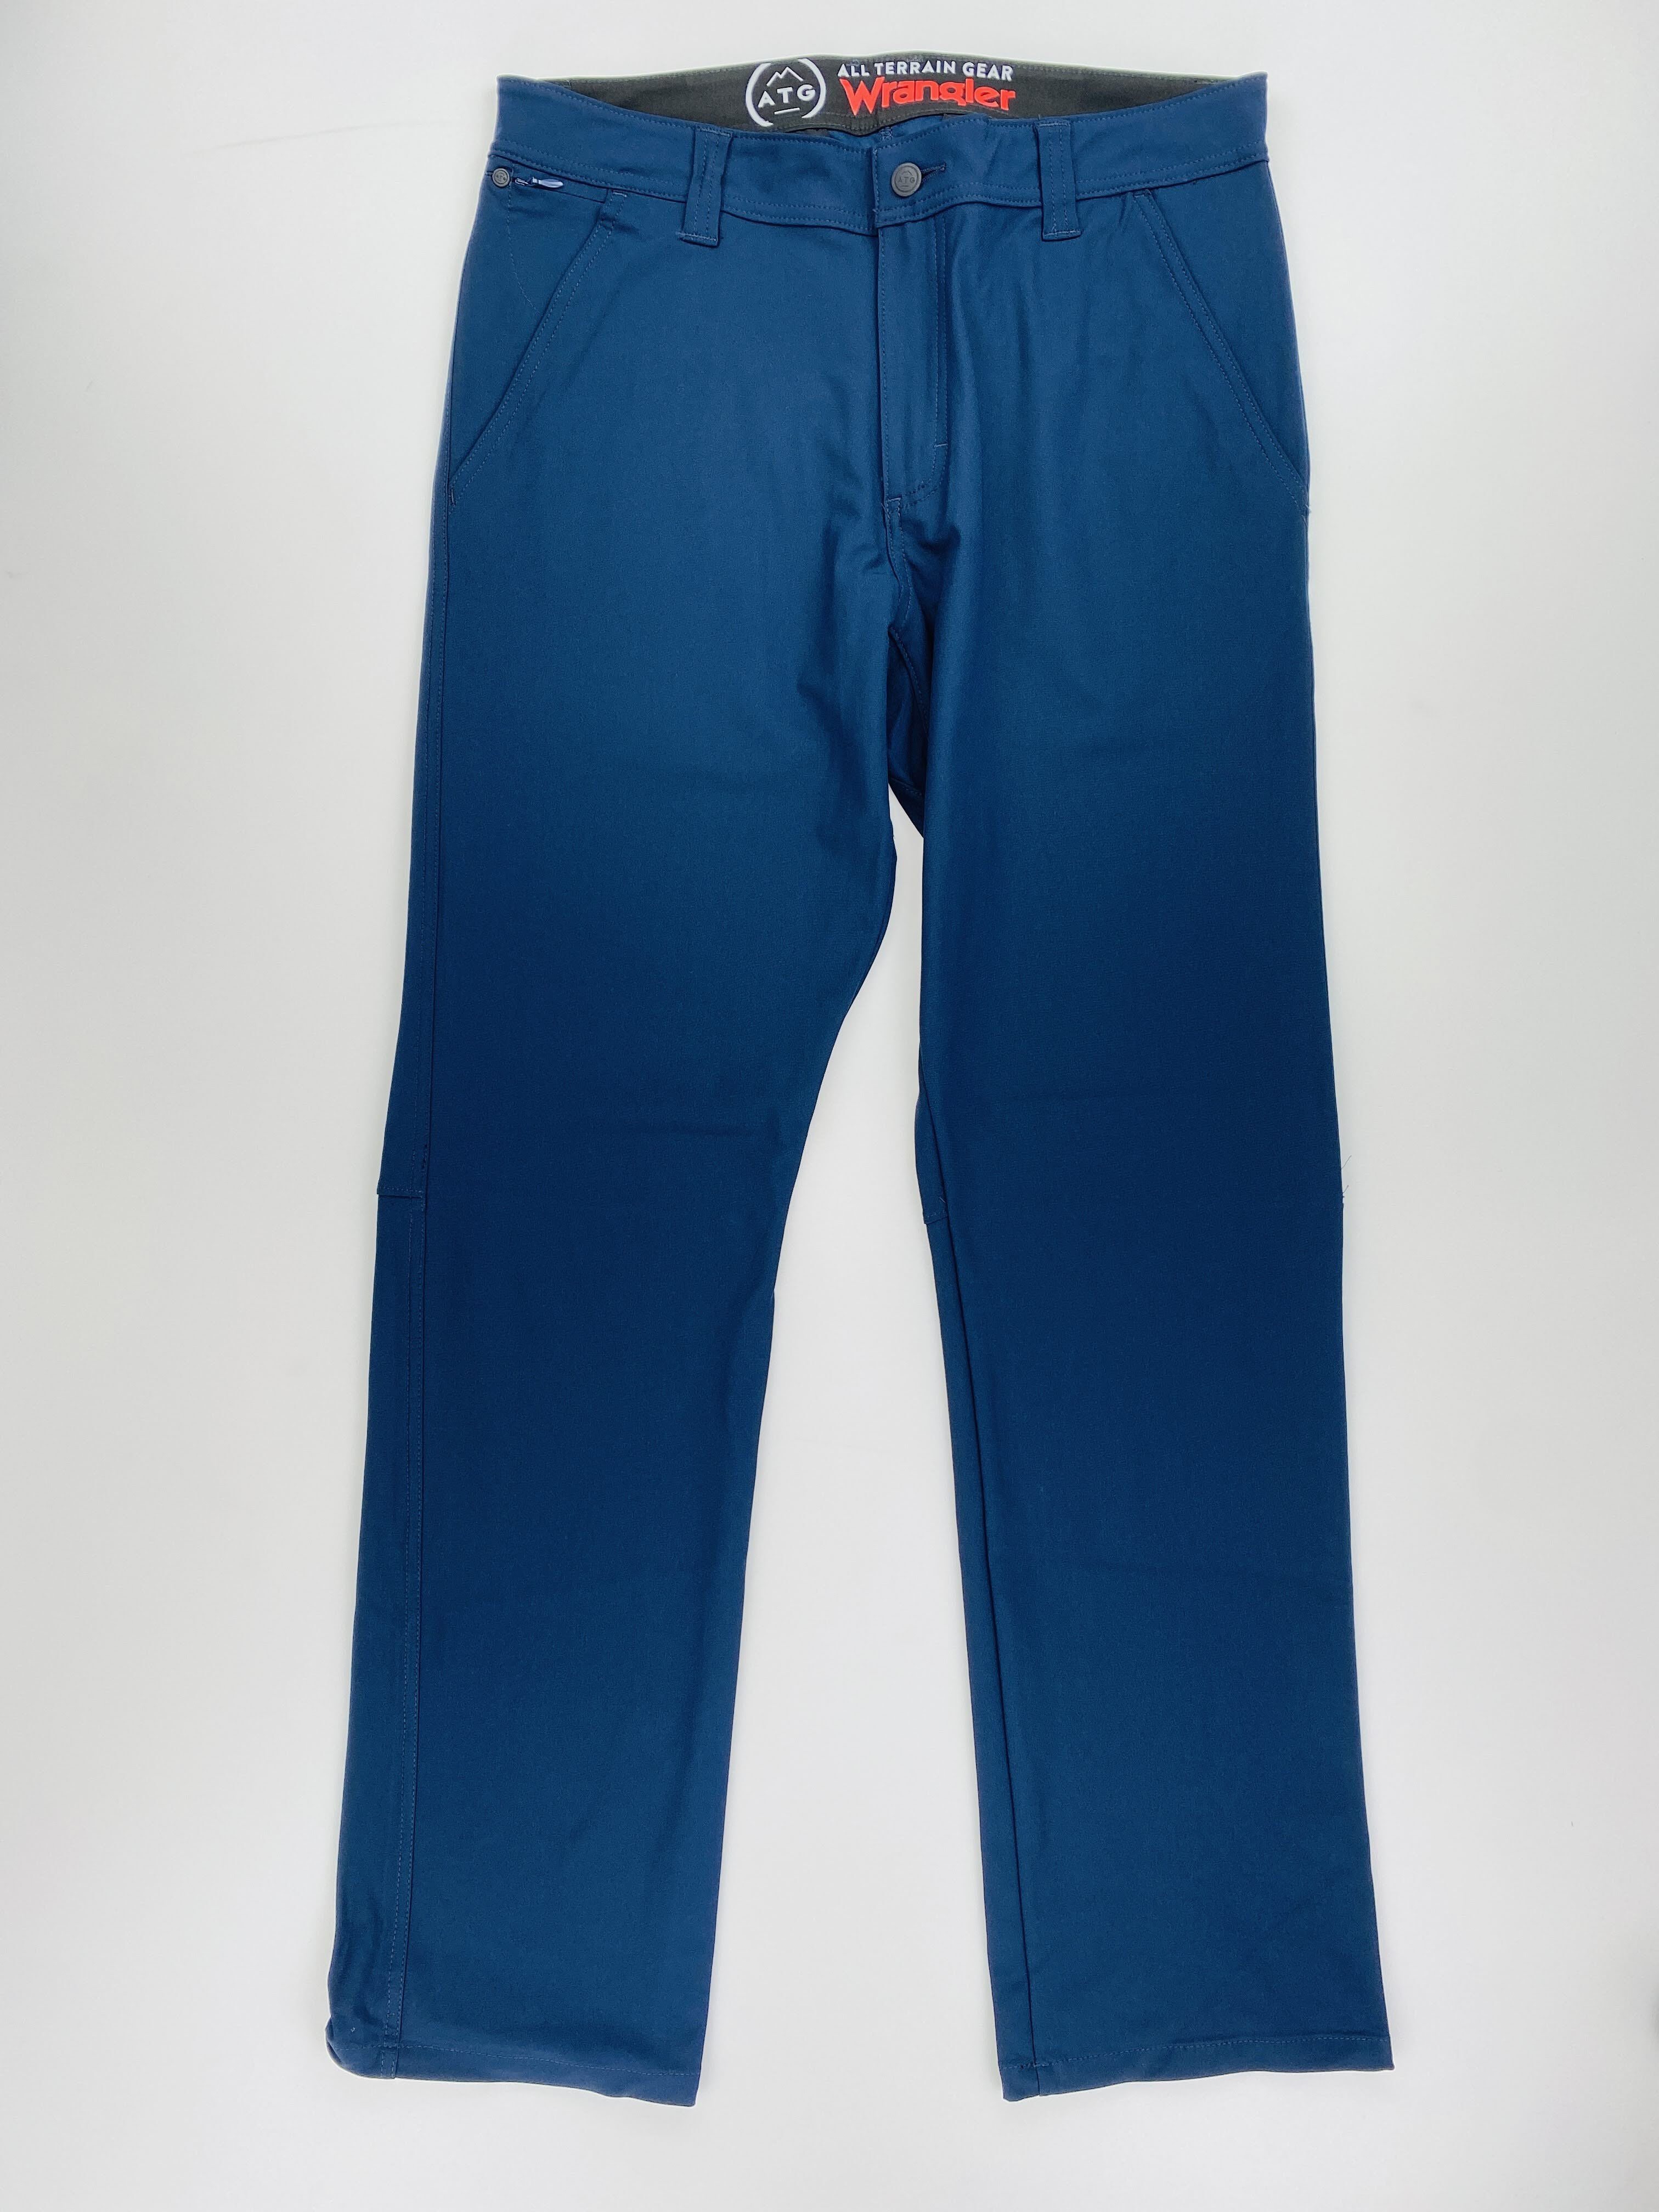 Wrangler Fwds Chino Pant - Second Hand Walking trousers - Women's - Bleu - US 28 | Hardloop